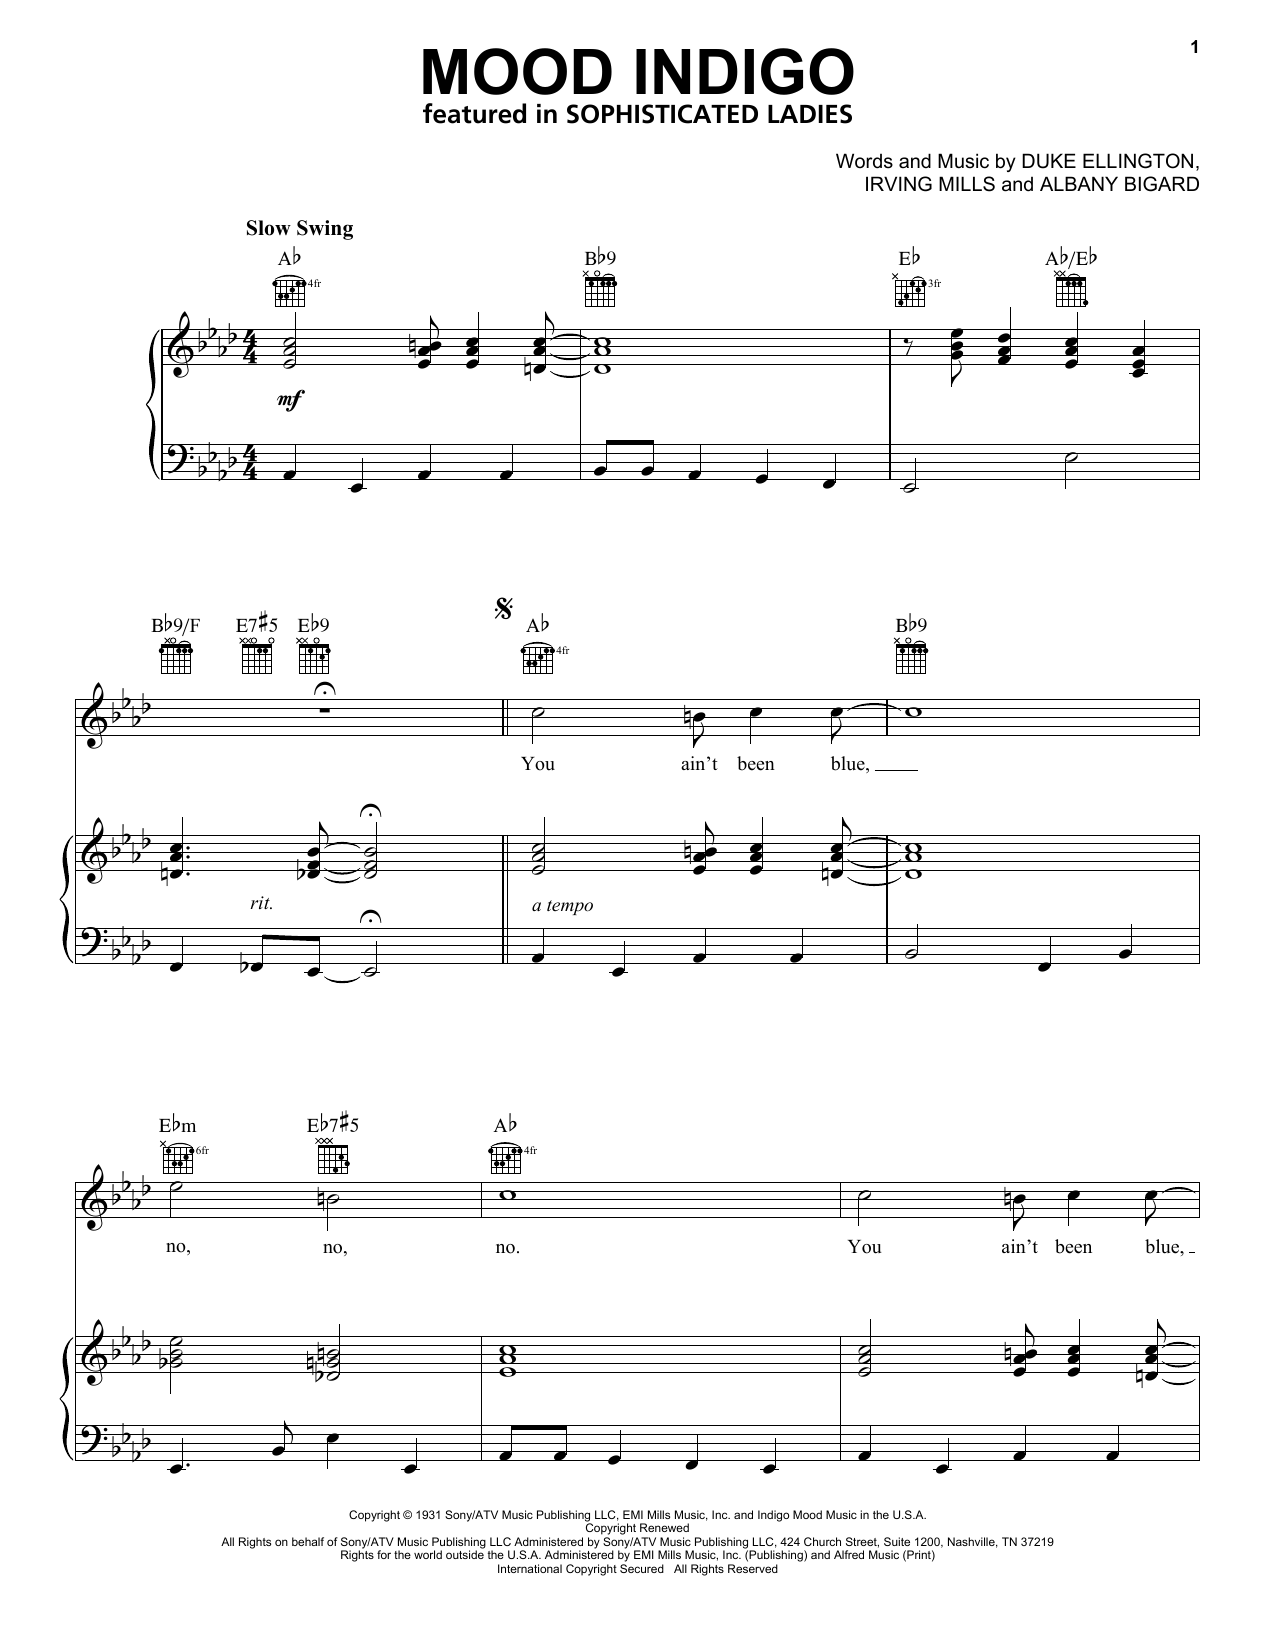 Duke Ellington Mood Indigo Sheet Music Notes & Chords for French Horn - Download or Print PDF